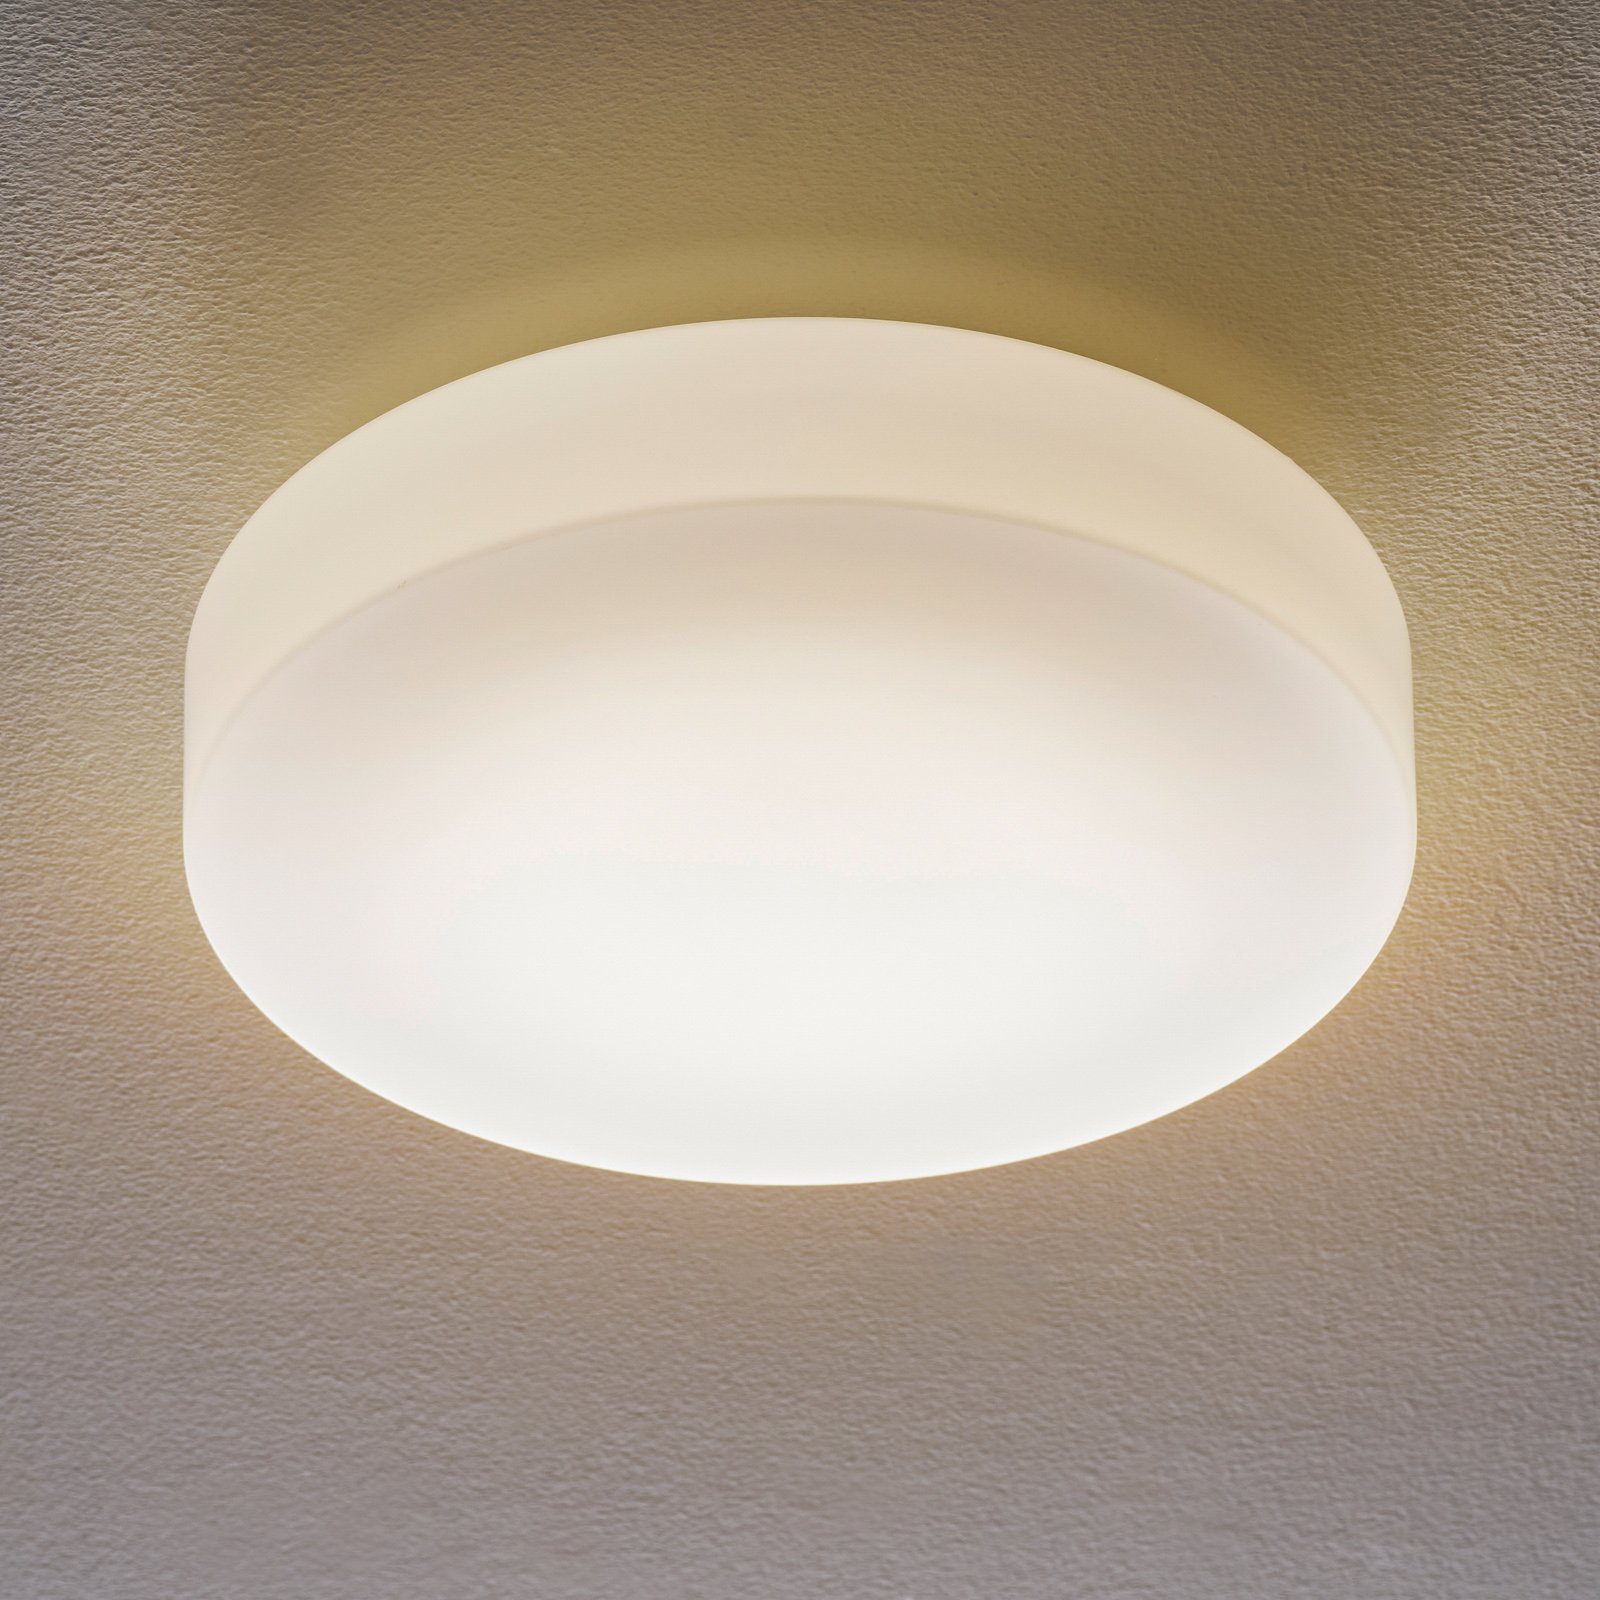 BEGA 50651 lampa sufitowa LED szkło opalowe Ø34cm